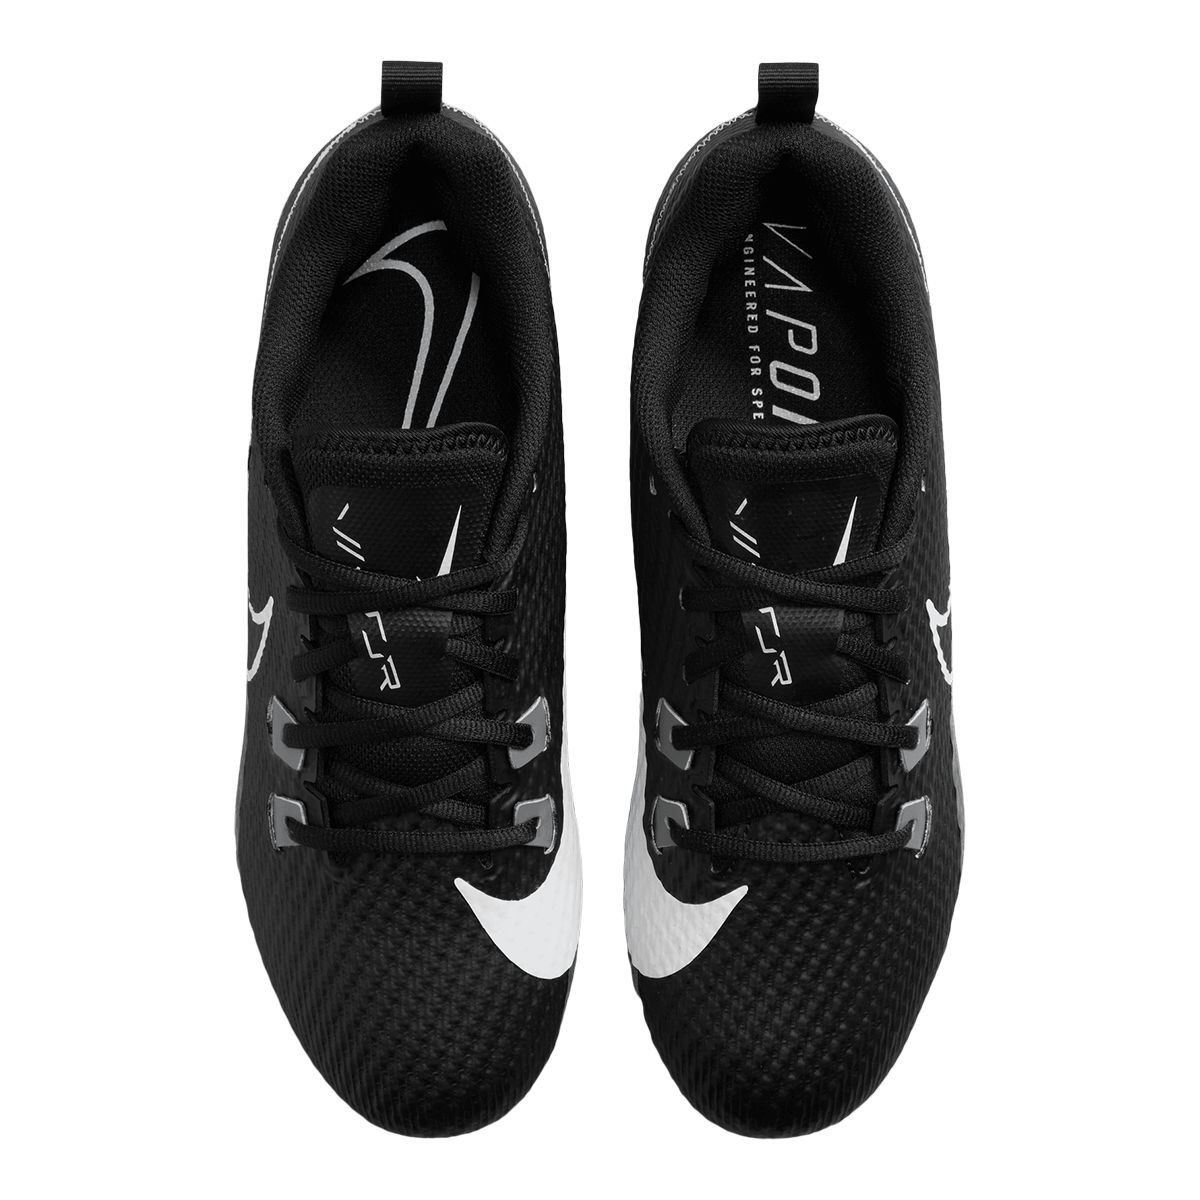 Nike Vapor Speed Men's 3/4 Football Tights in Black for Men